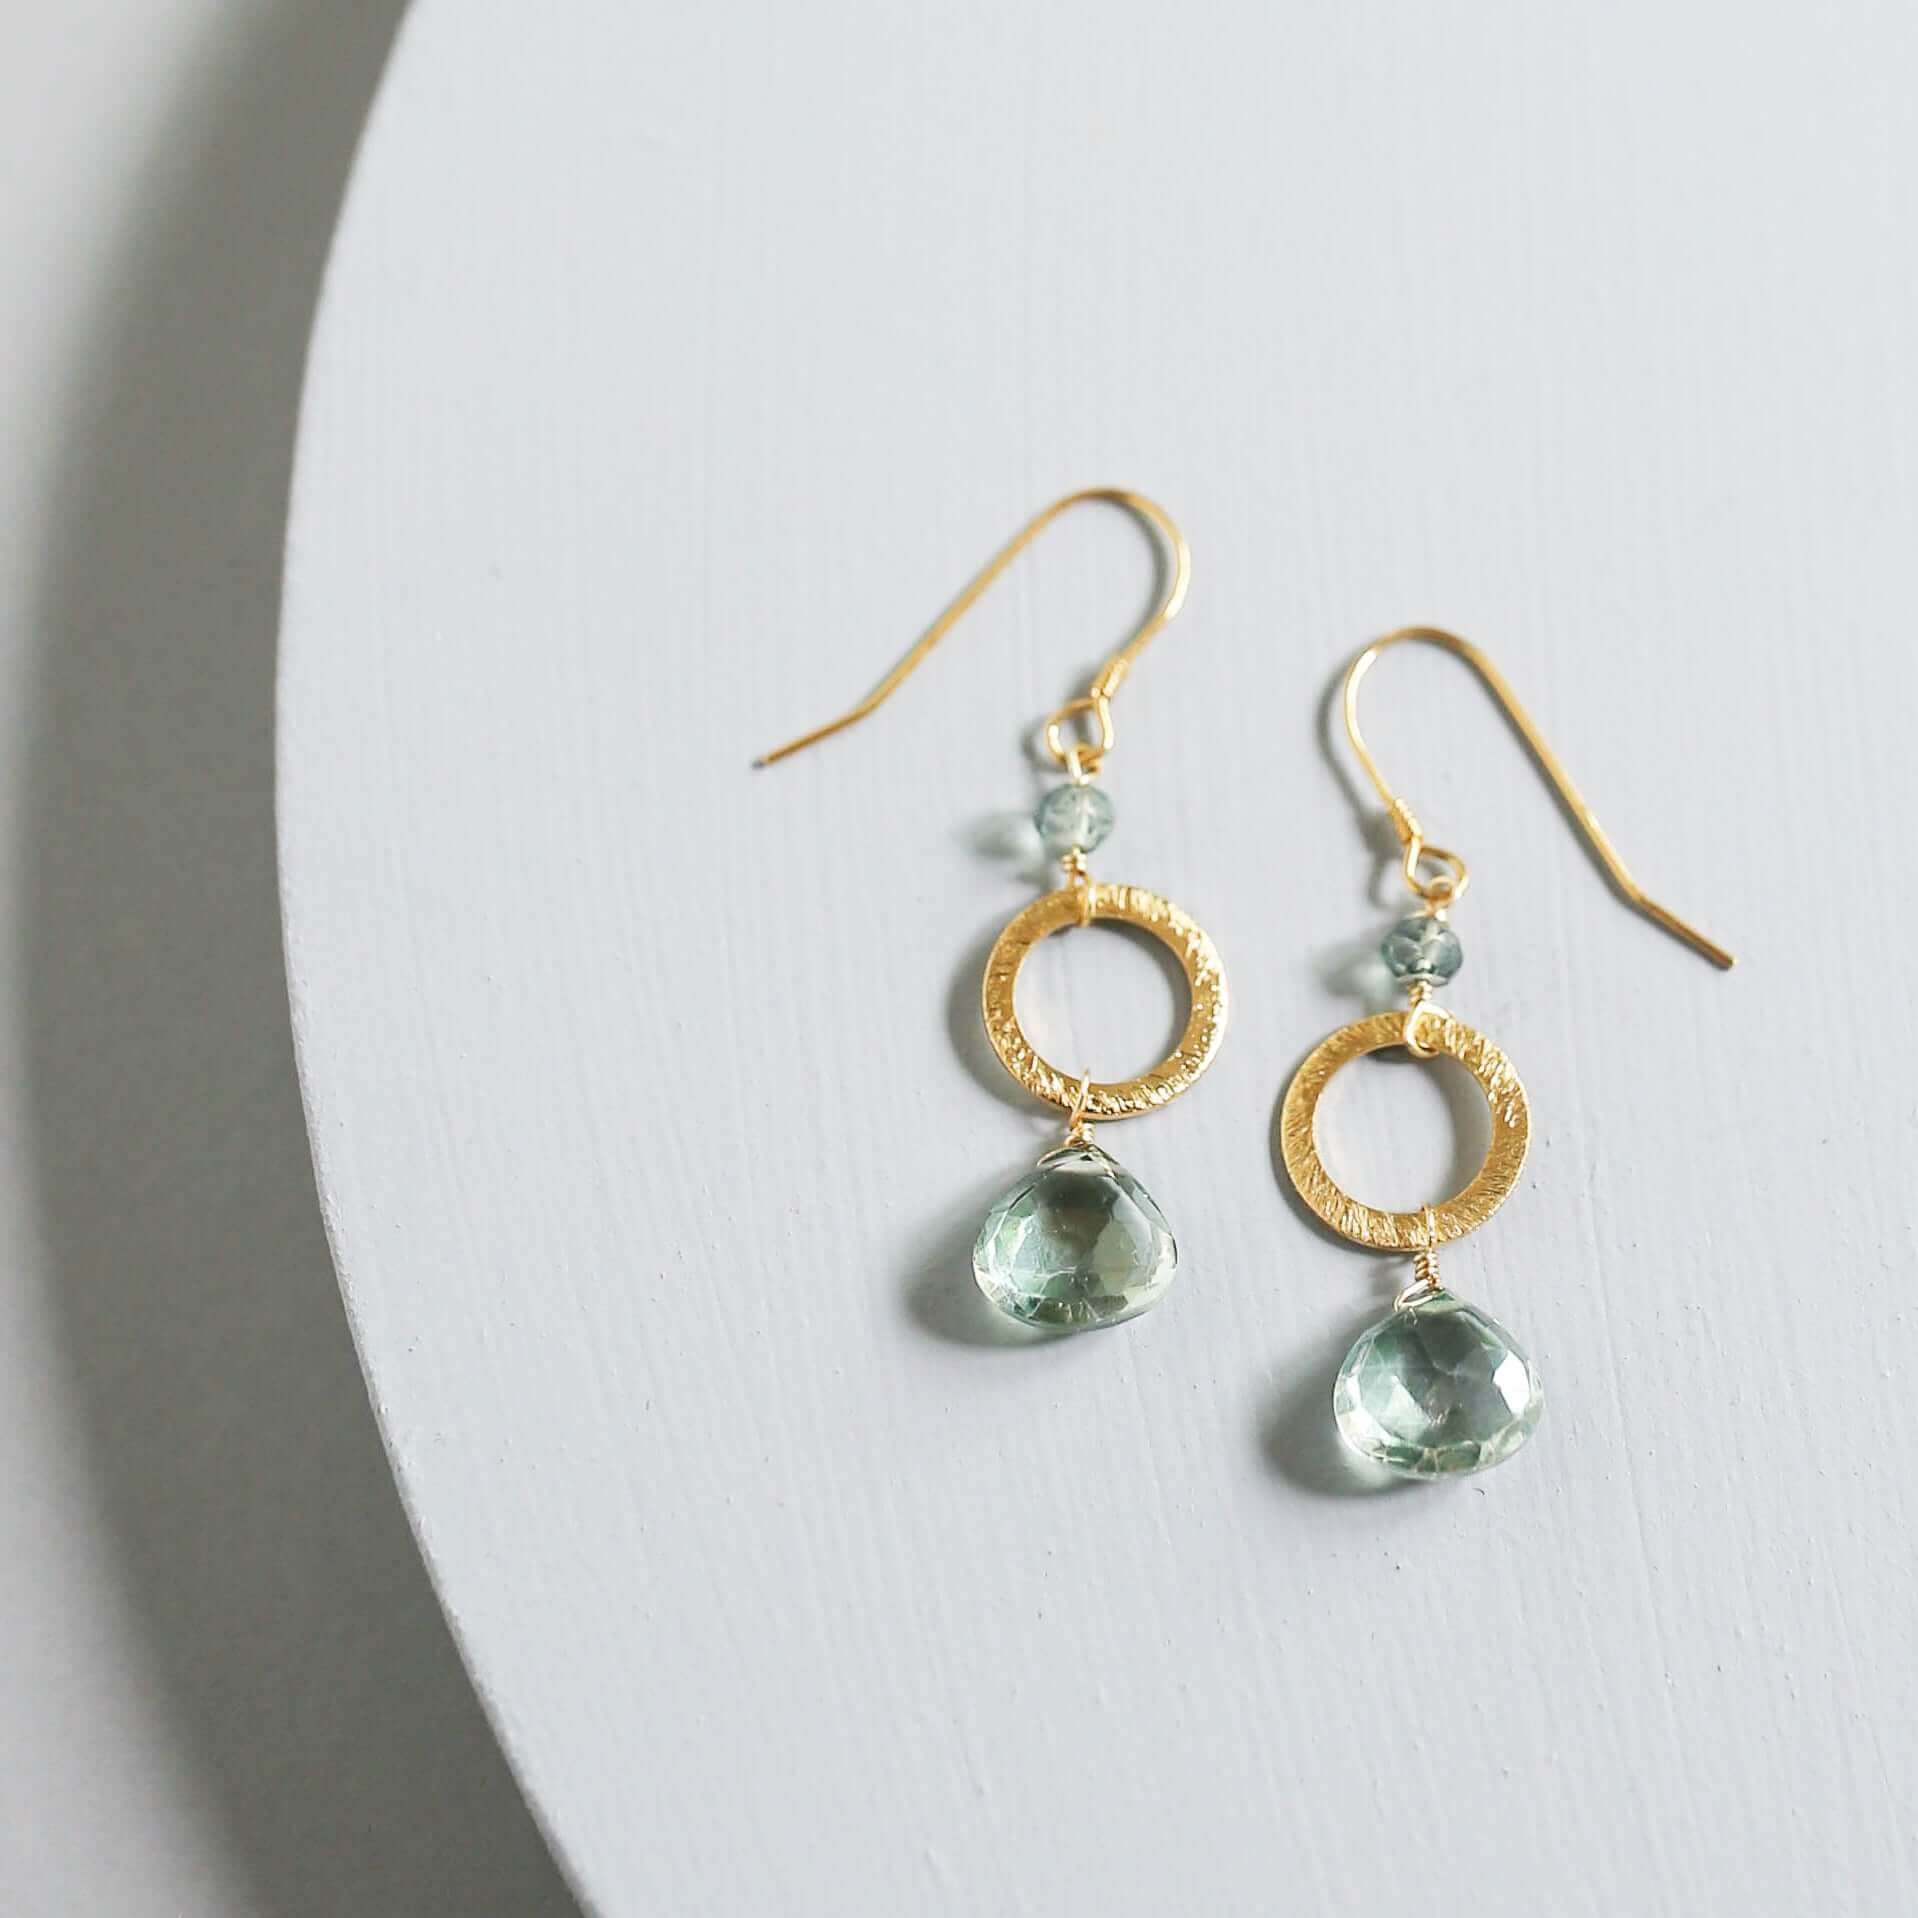 Handmade Gold-Plated Drop Earrings with Green amethyst gemstones